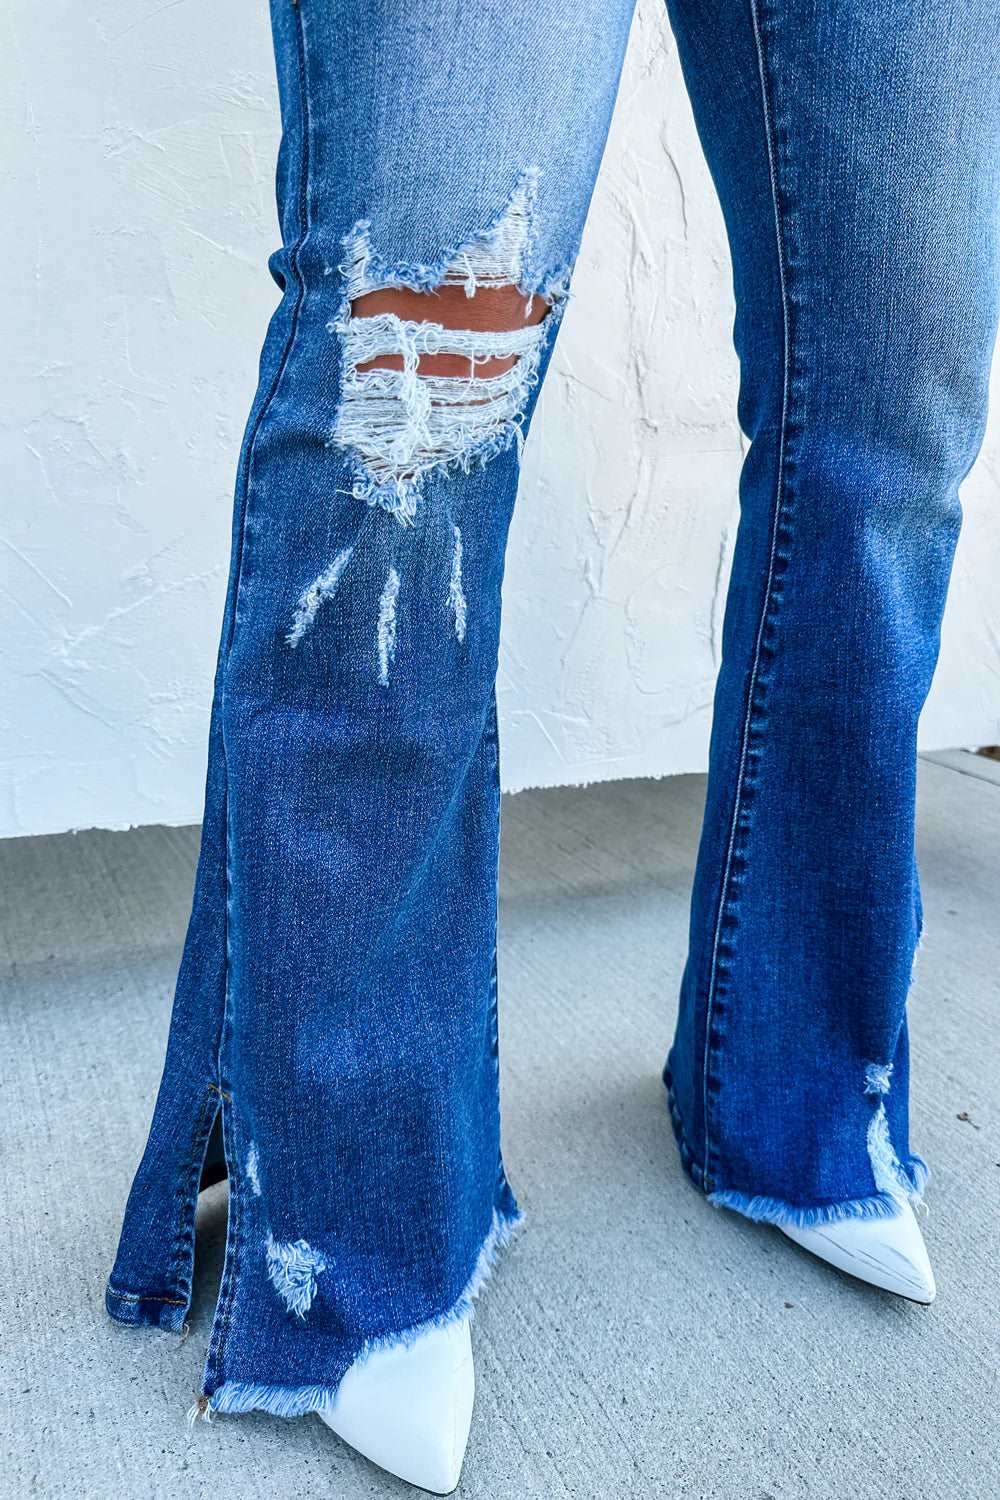 Diesel Split Hem Jeans